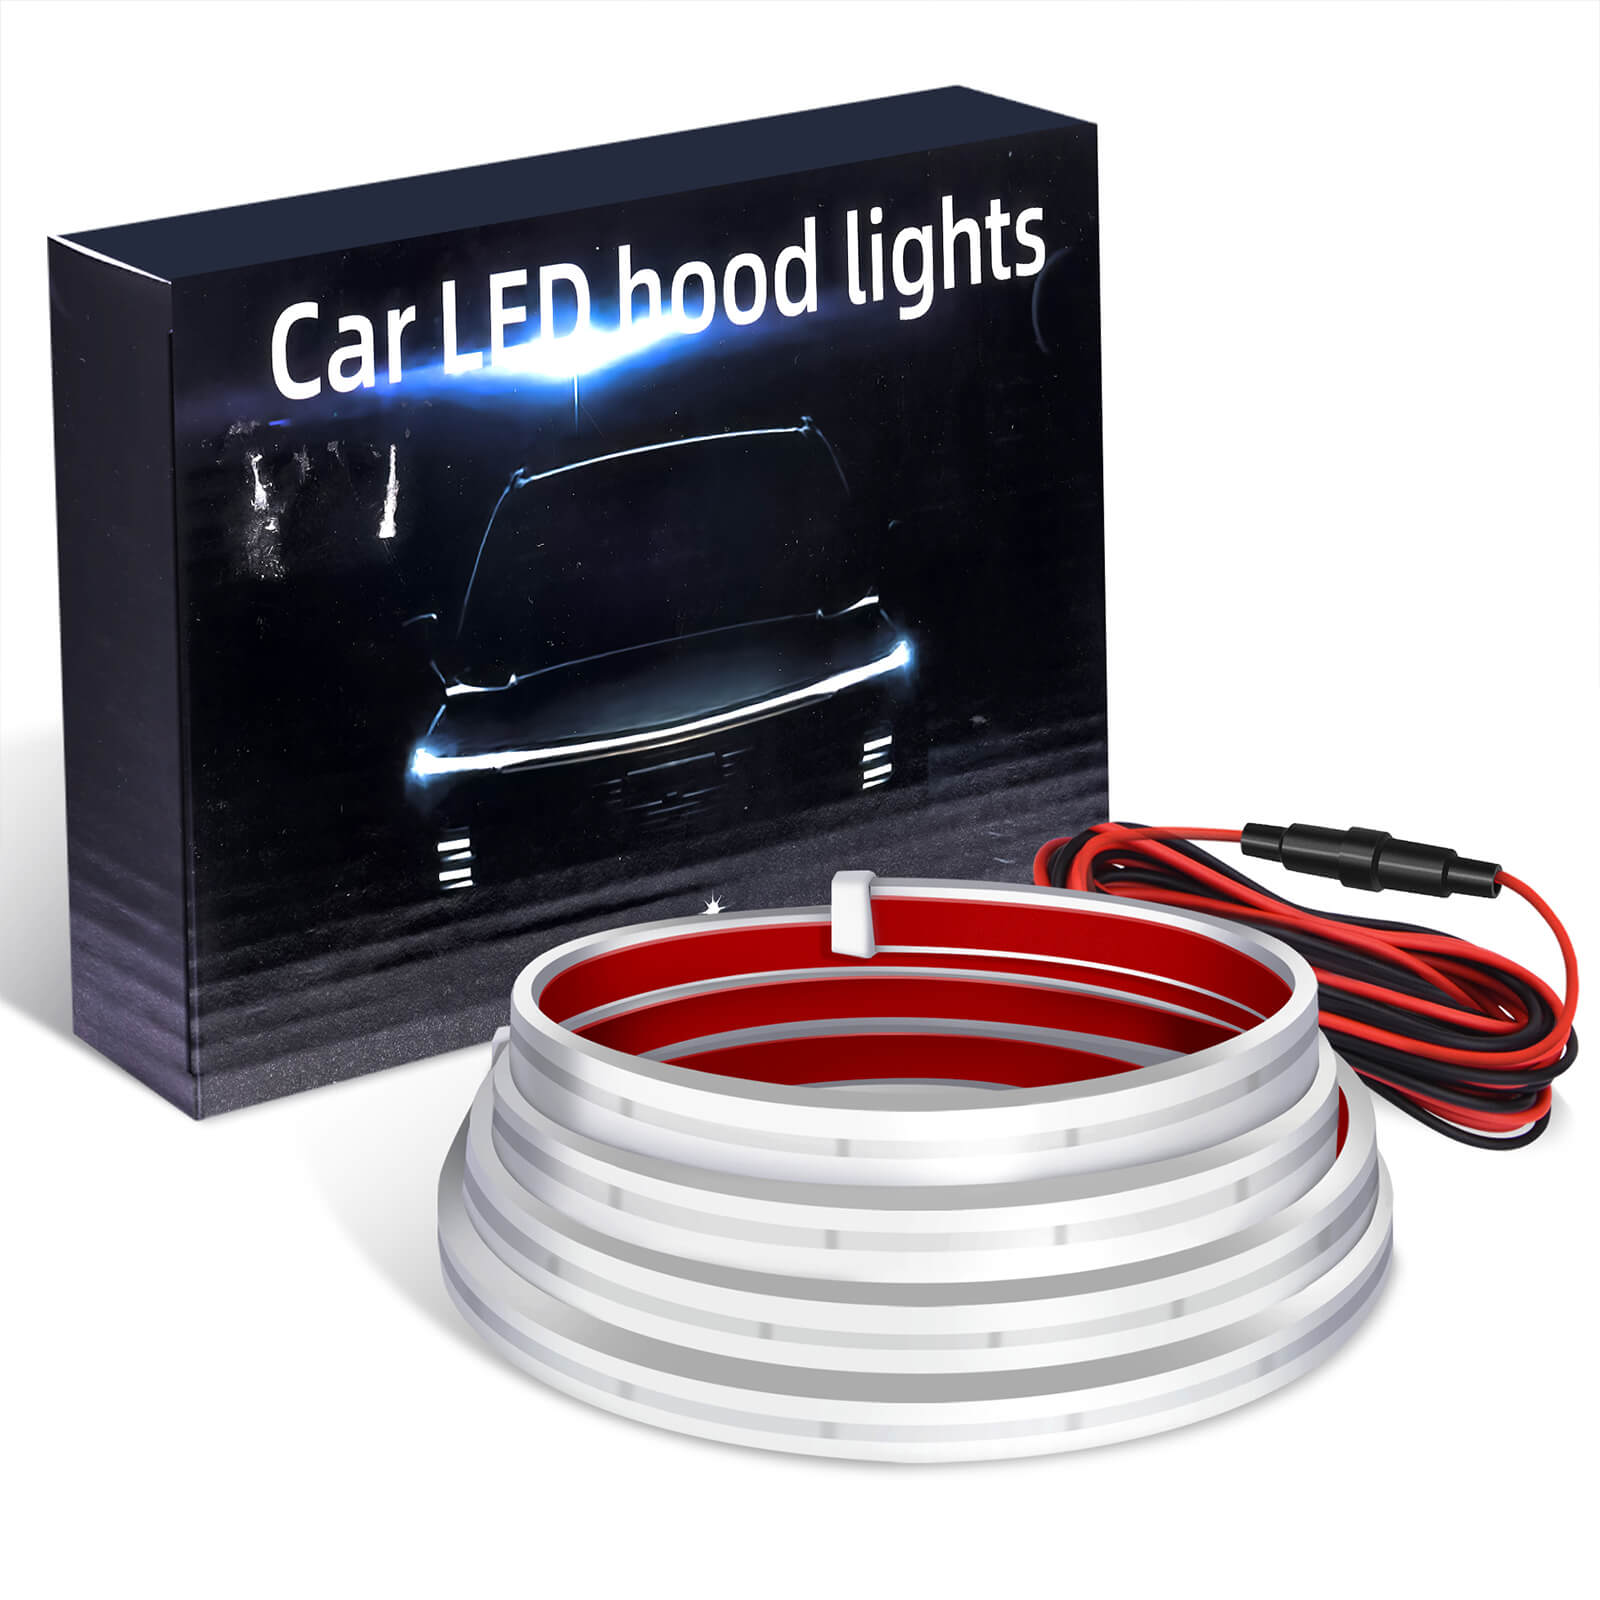 Car Led Hood Lights Car Hood Light Car Car LED Strip Bonnet Light